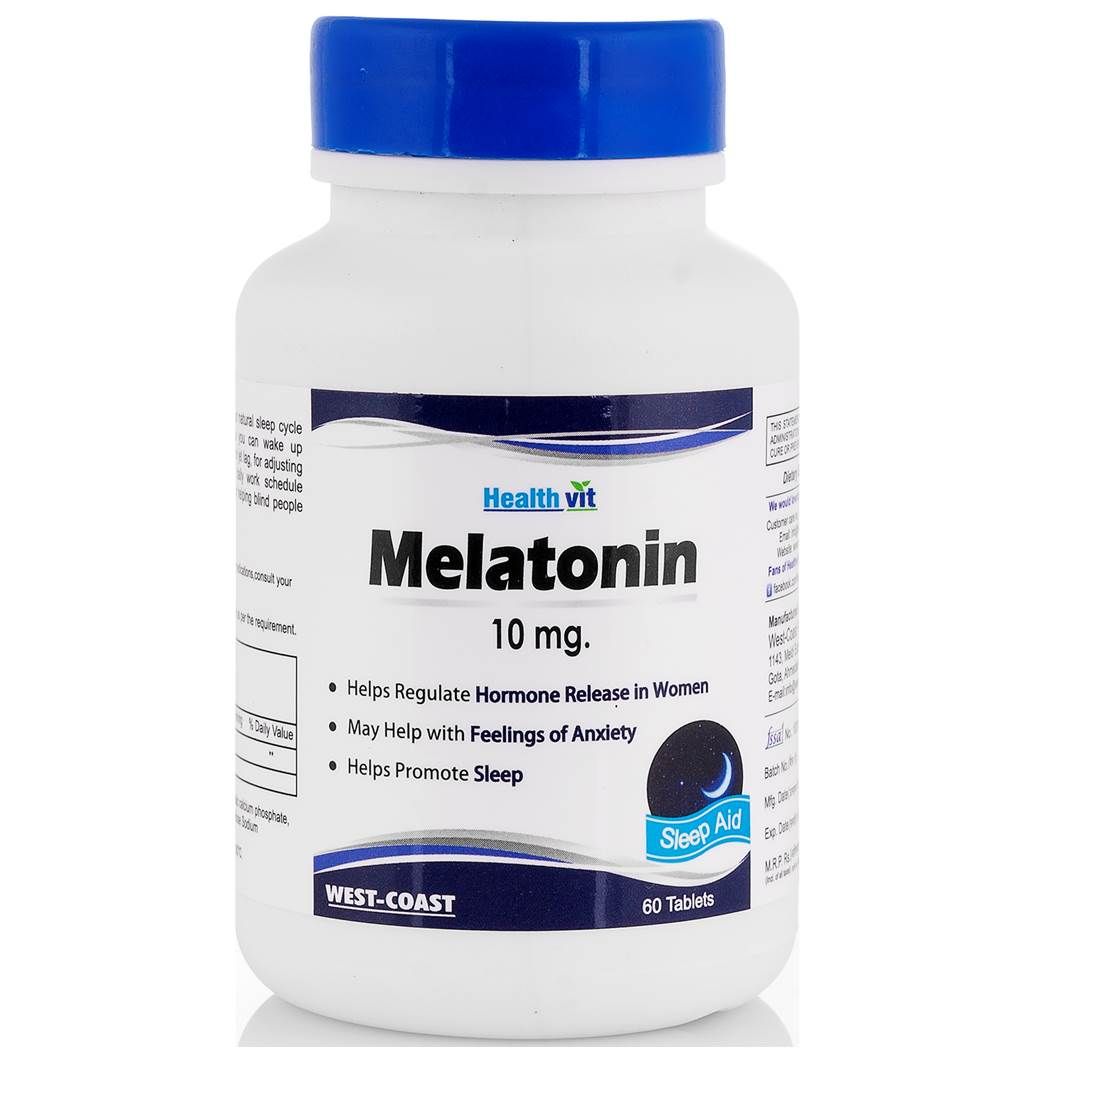 Healthvit Melatonin 10 mg, 60 Tablets, Pack of 1 